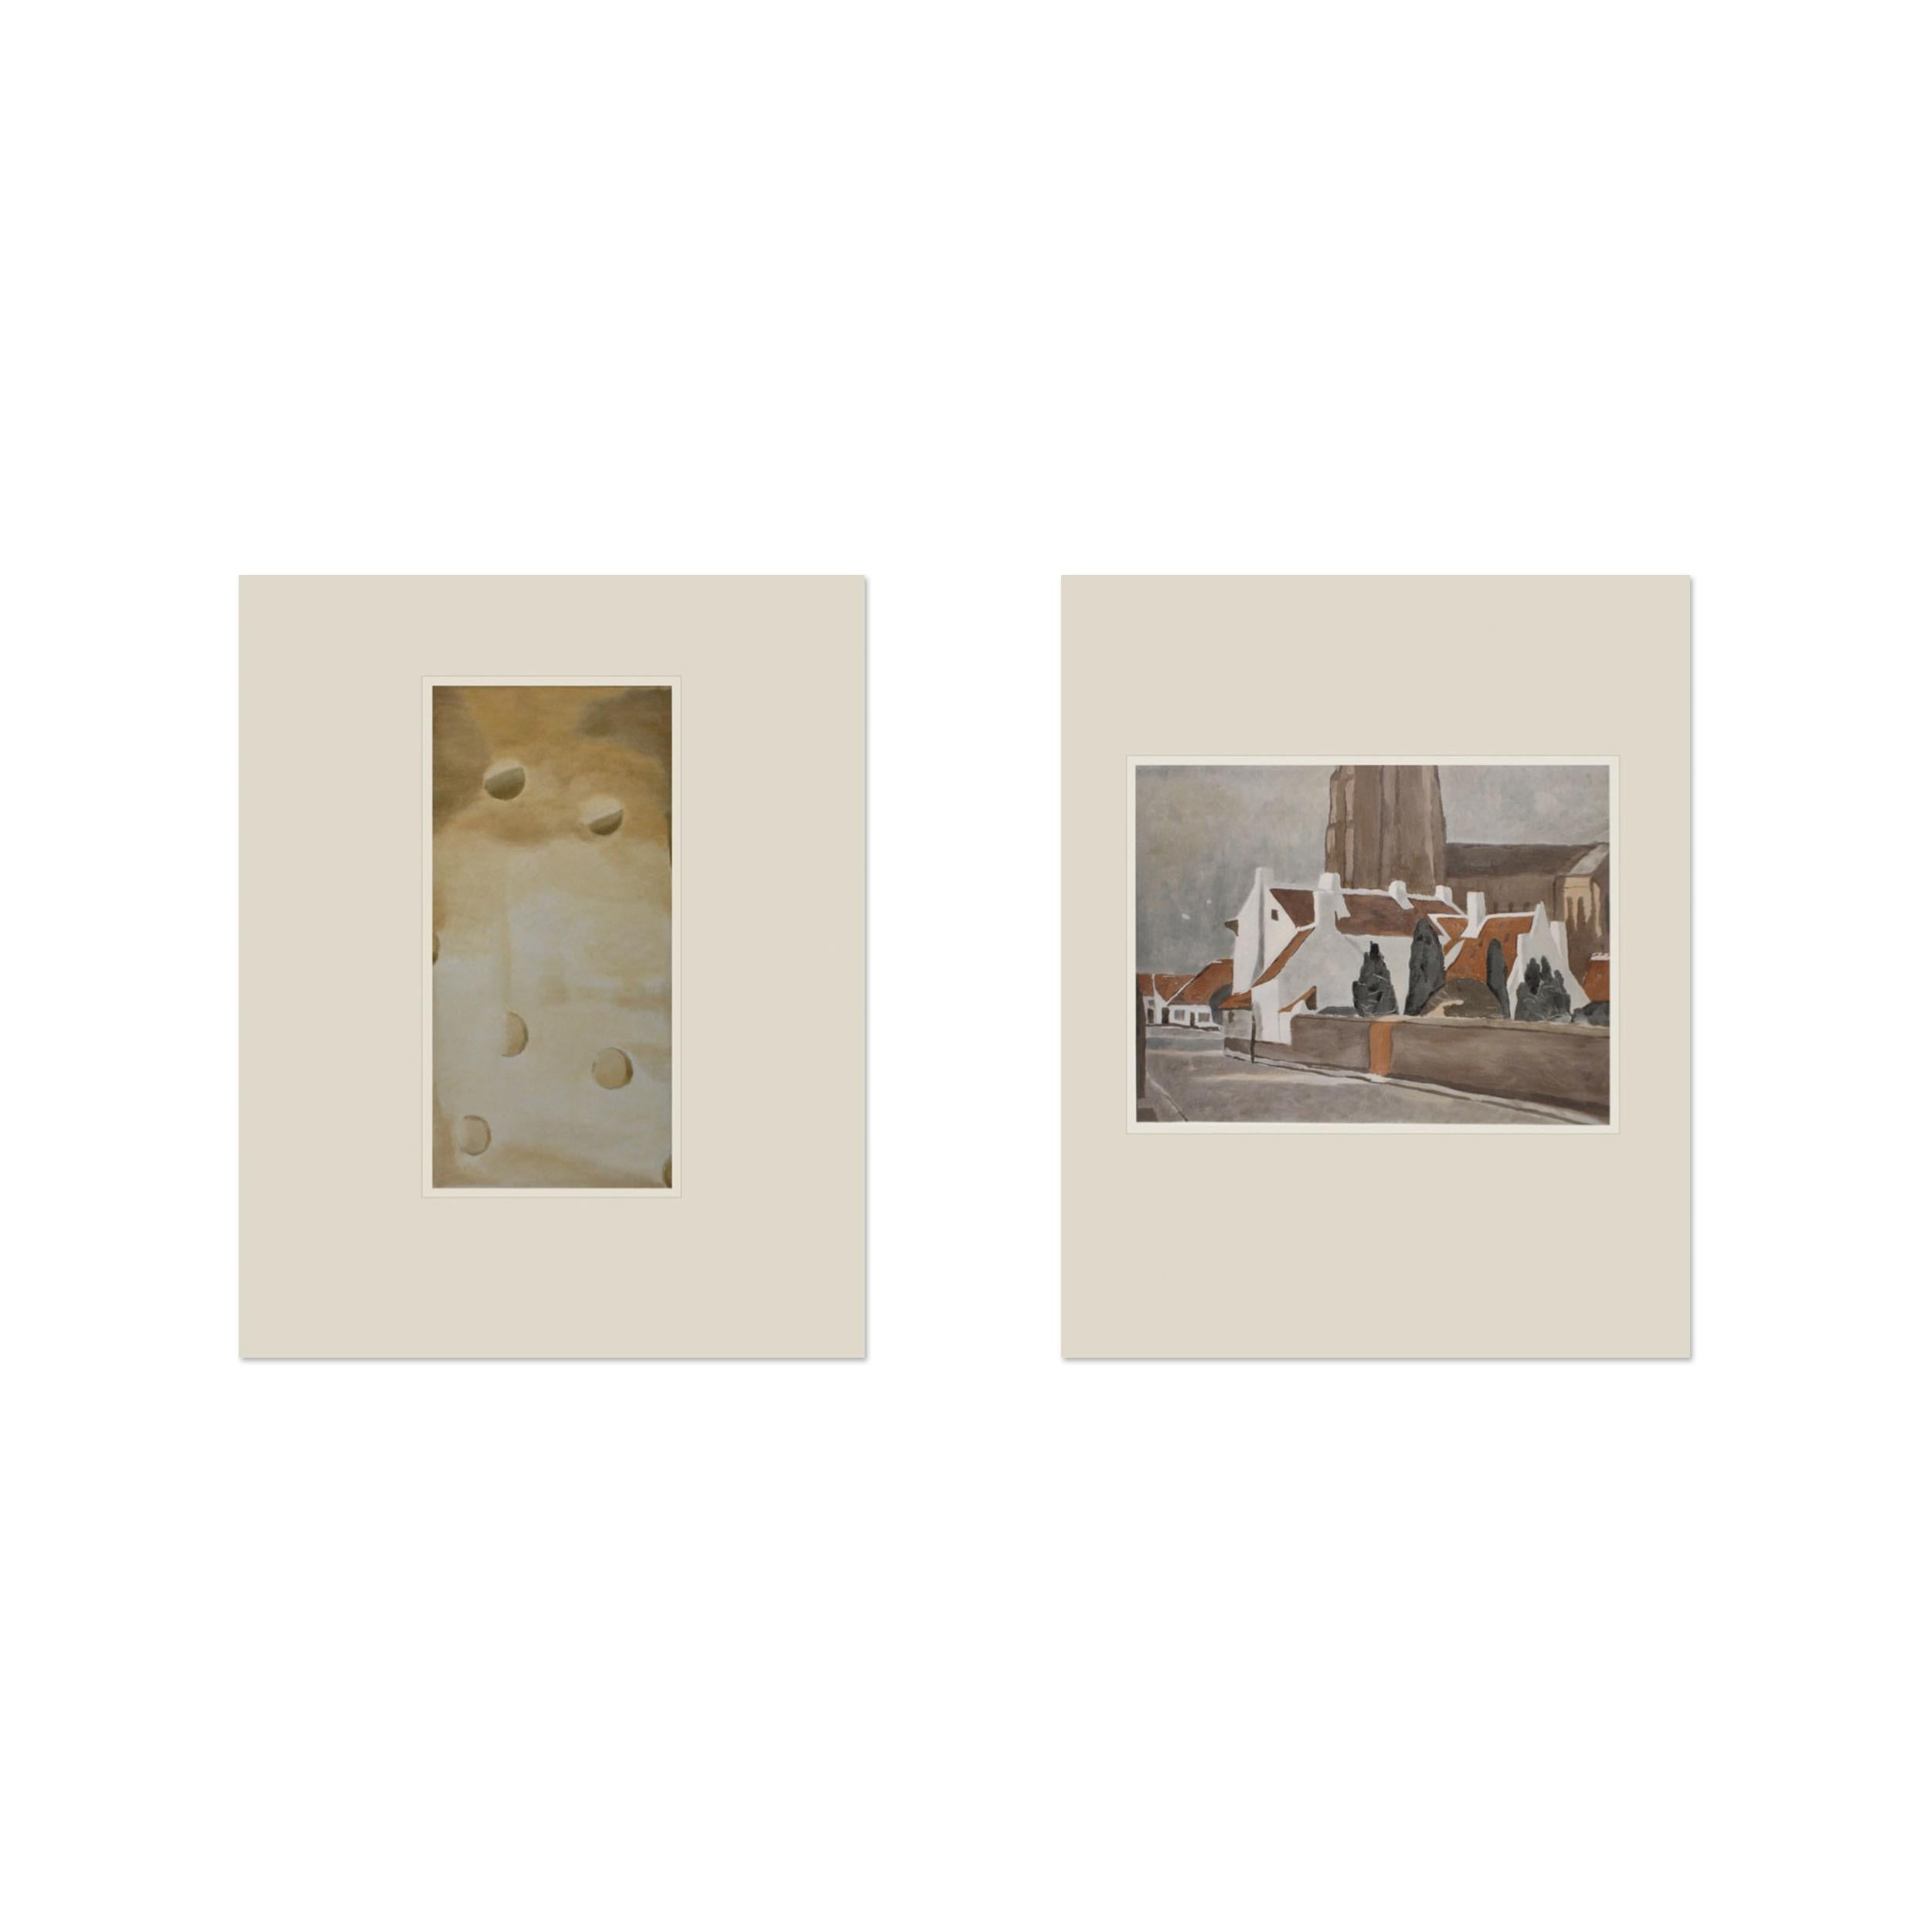 Luc Tuymans (Belgian, b. 1958)
Wenn der Frühling kommt (When Spring Comes), 2007
Medium: Portfolio with 17 digital pigment prints on semi-transparent paper, mounted onto heavy rag paper
Dimensions: 50 x 40 cm (19.75 x 15.75″) each
Edition of 50 + 8